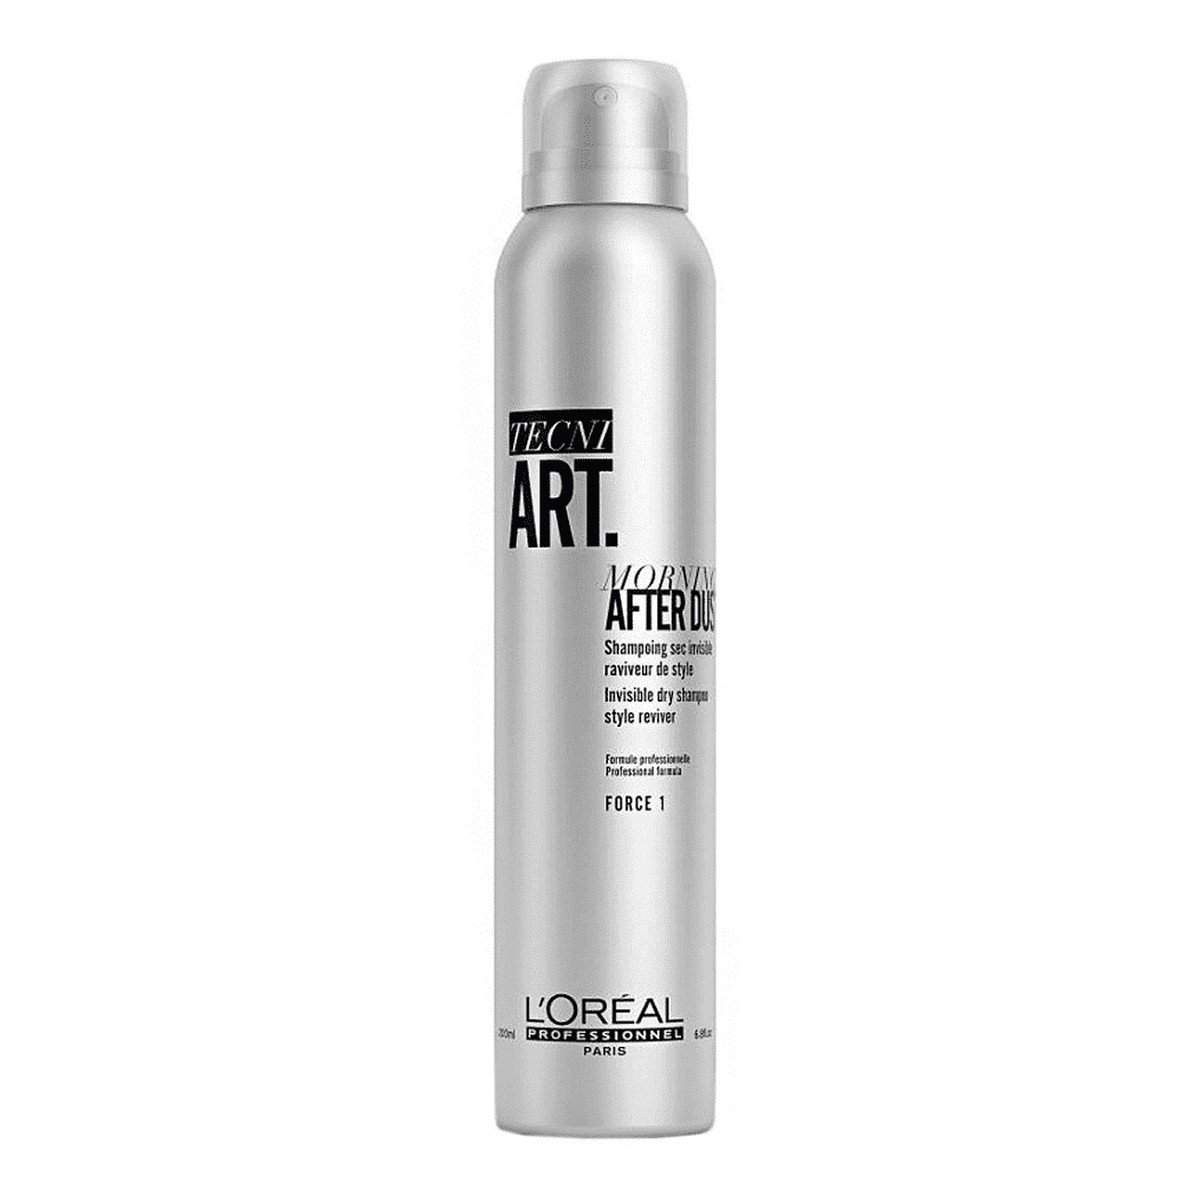 L'Oreal Paris Tecni Art Morning After Dust suchy szampon Force 1 200ml